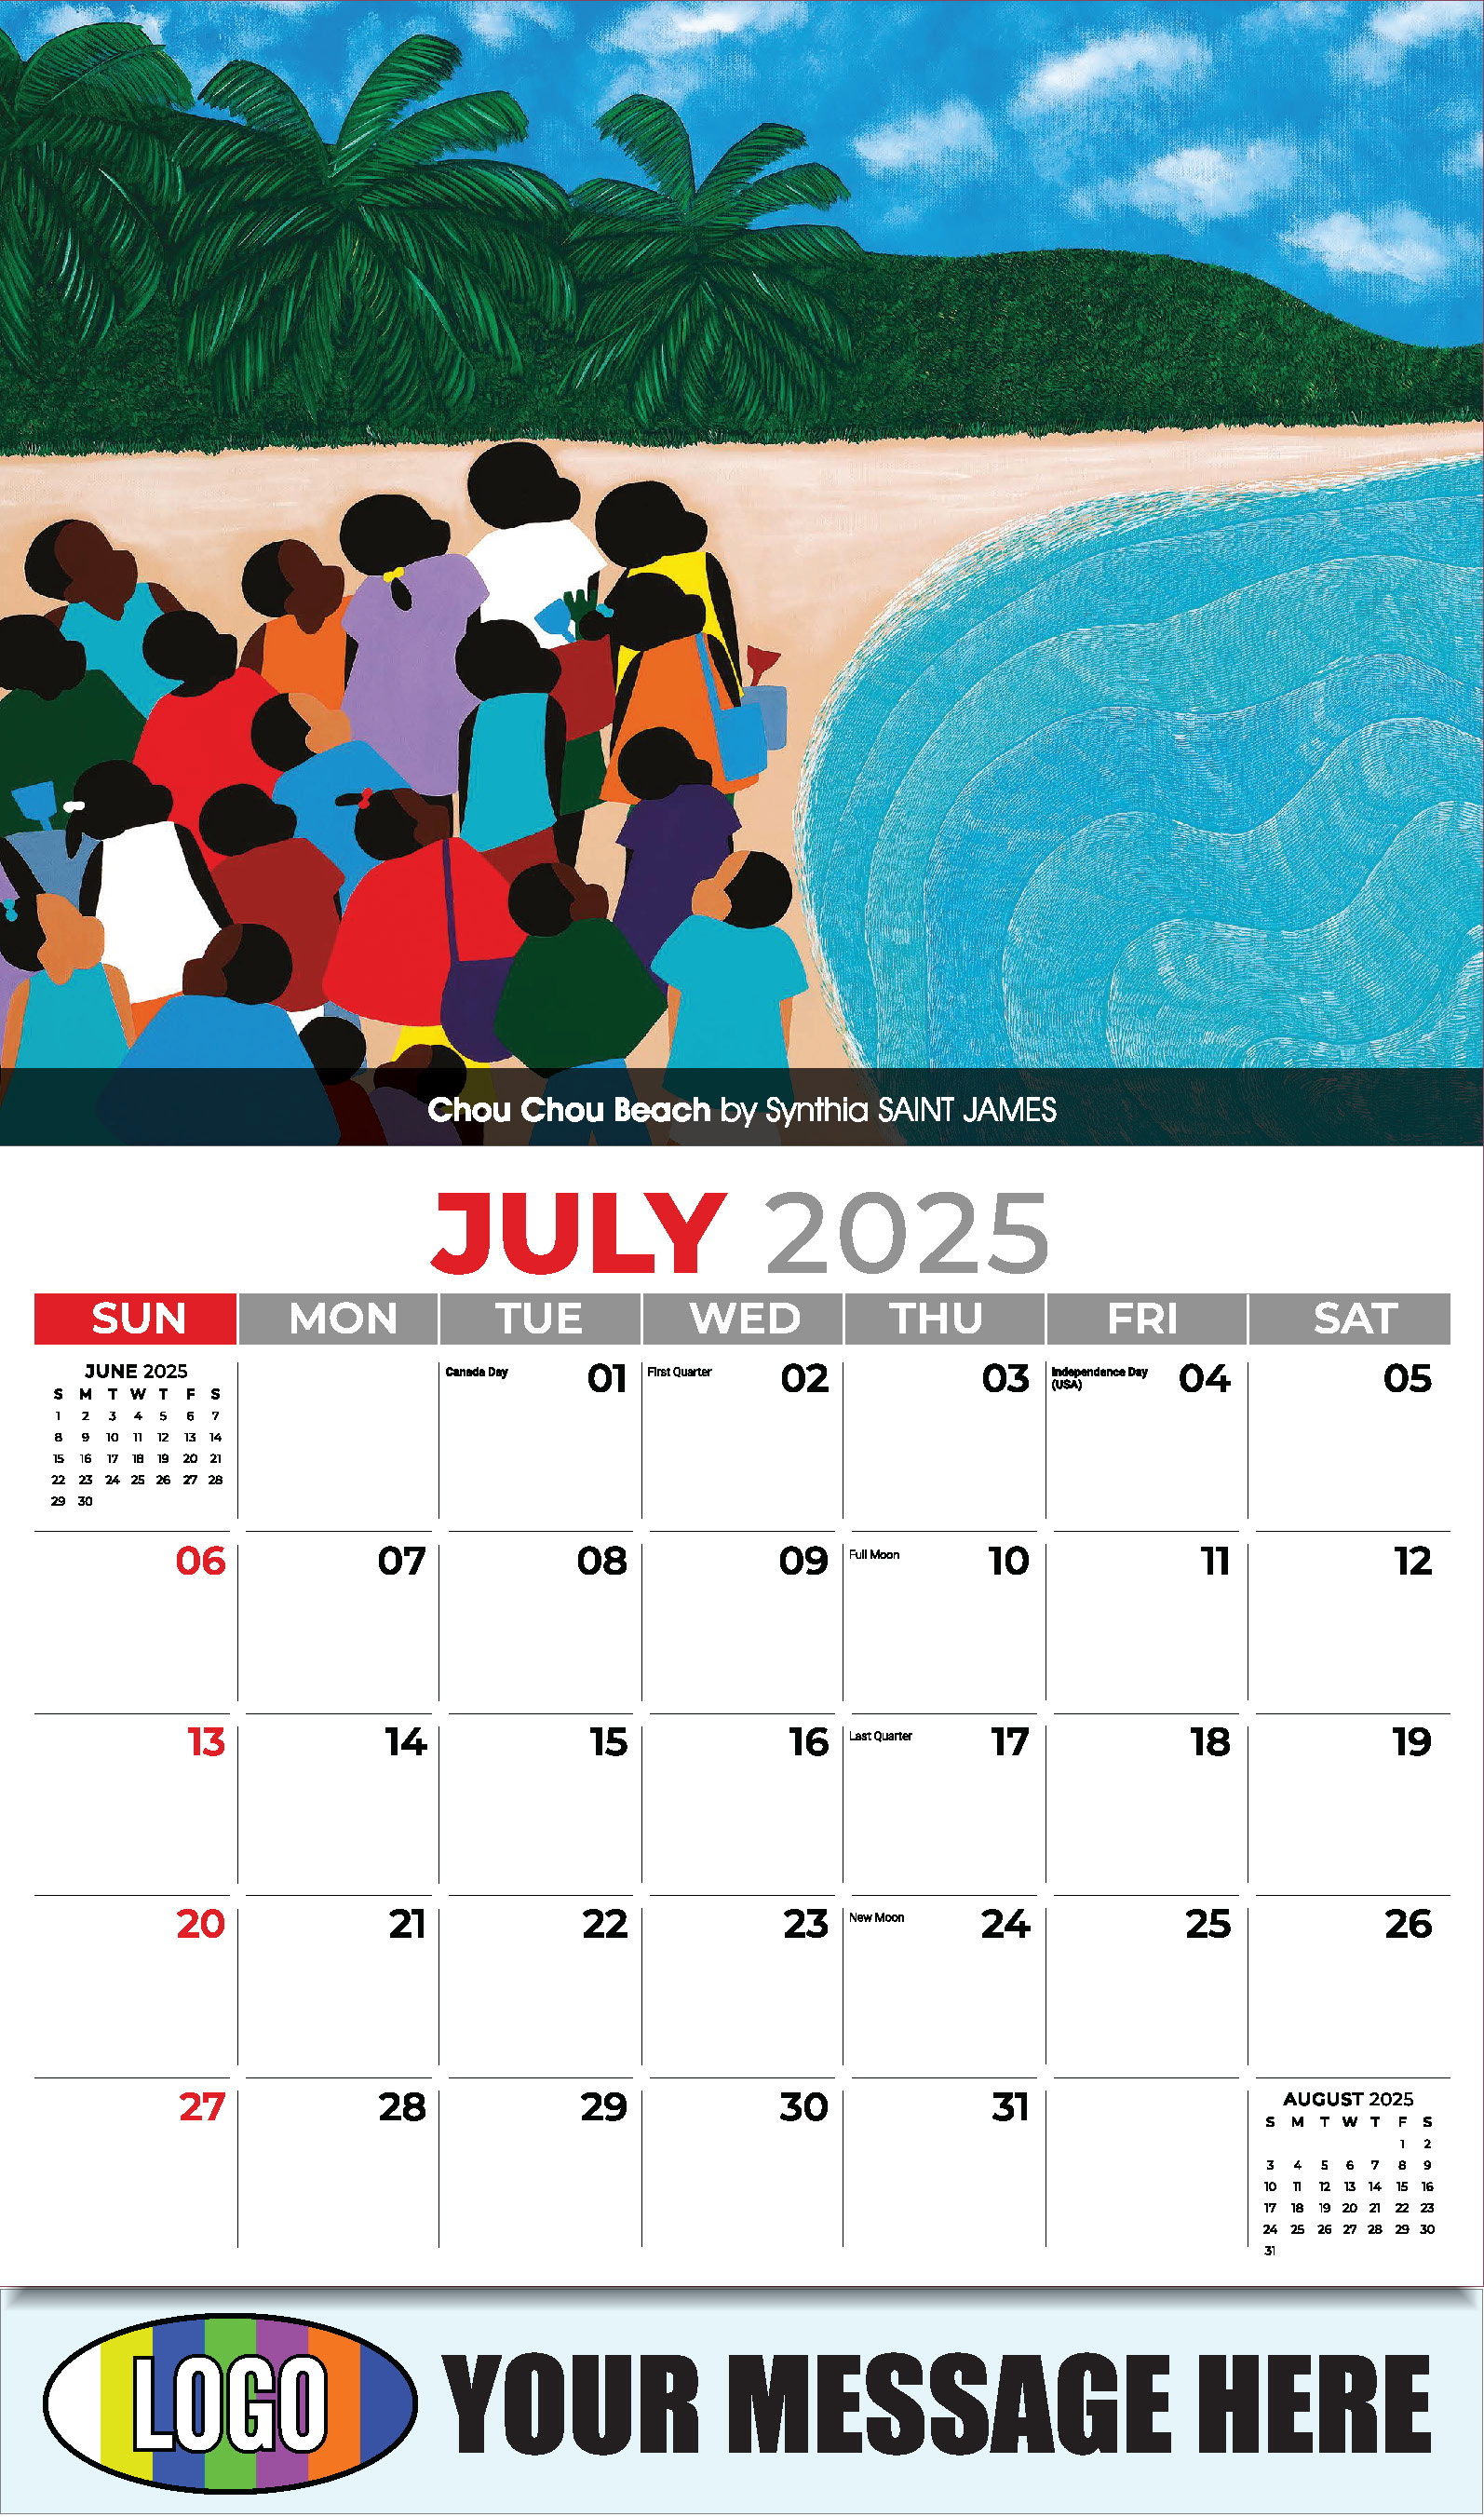 Celebration of African American Art 2025 Business Promotional Calendar - July